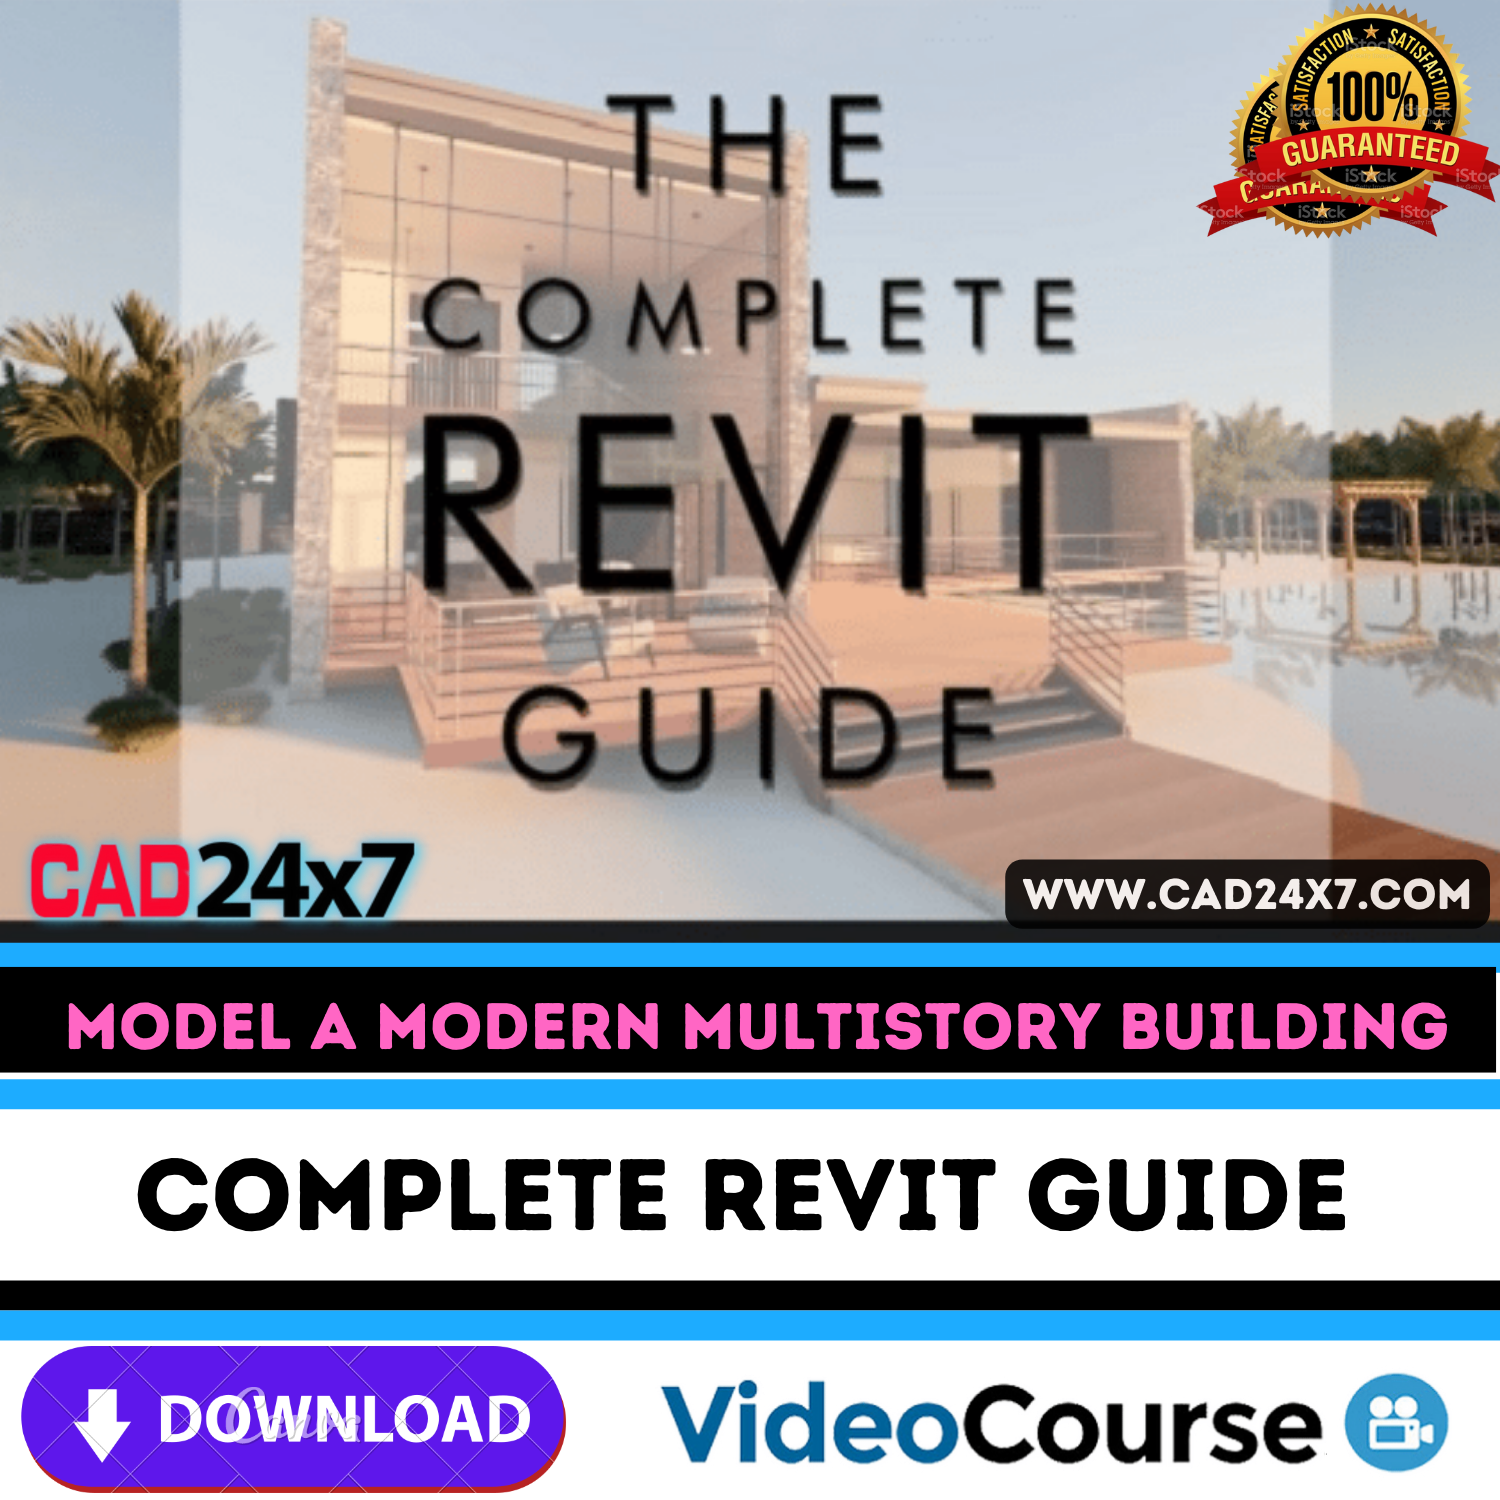 Complete Revit Guide – Model a Modern Multistory Building